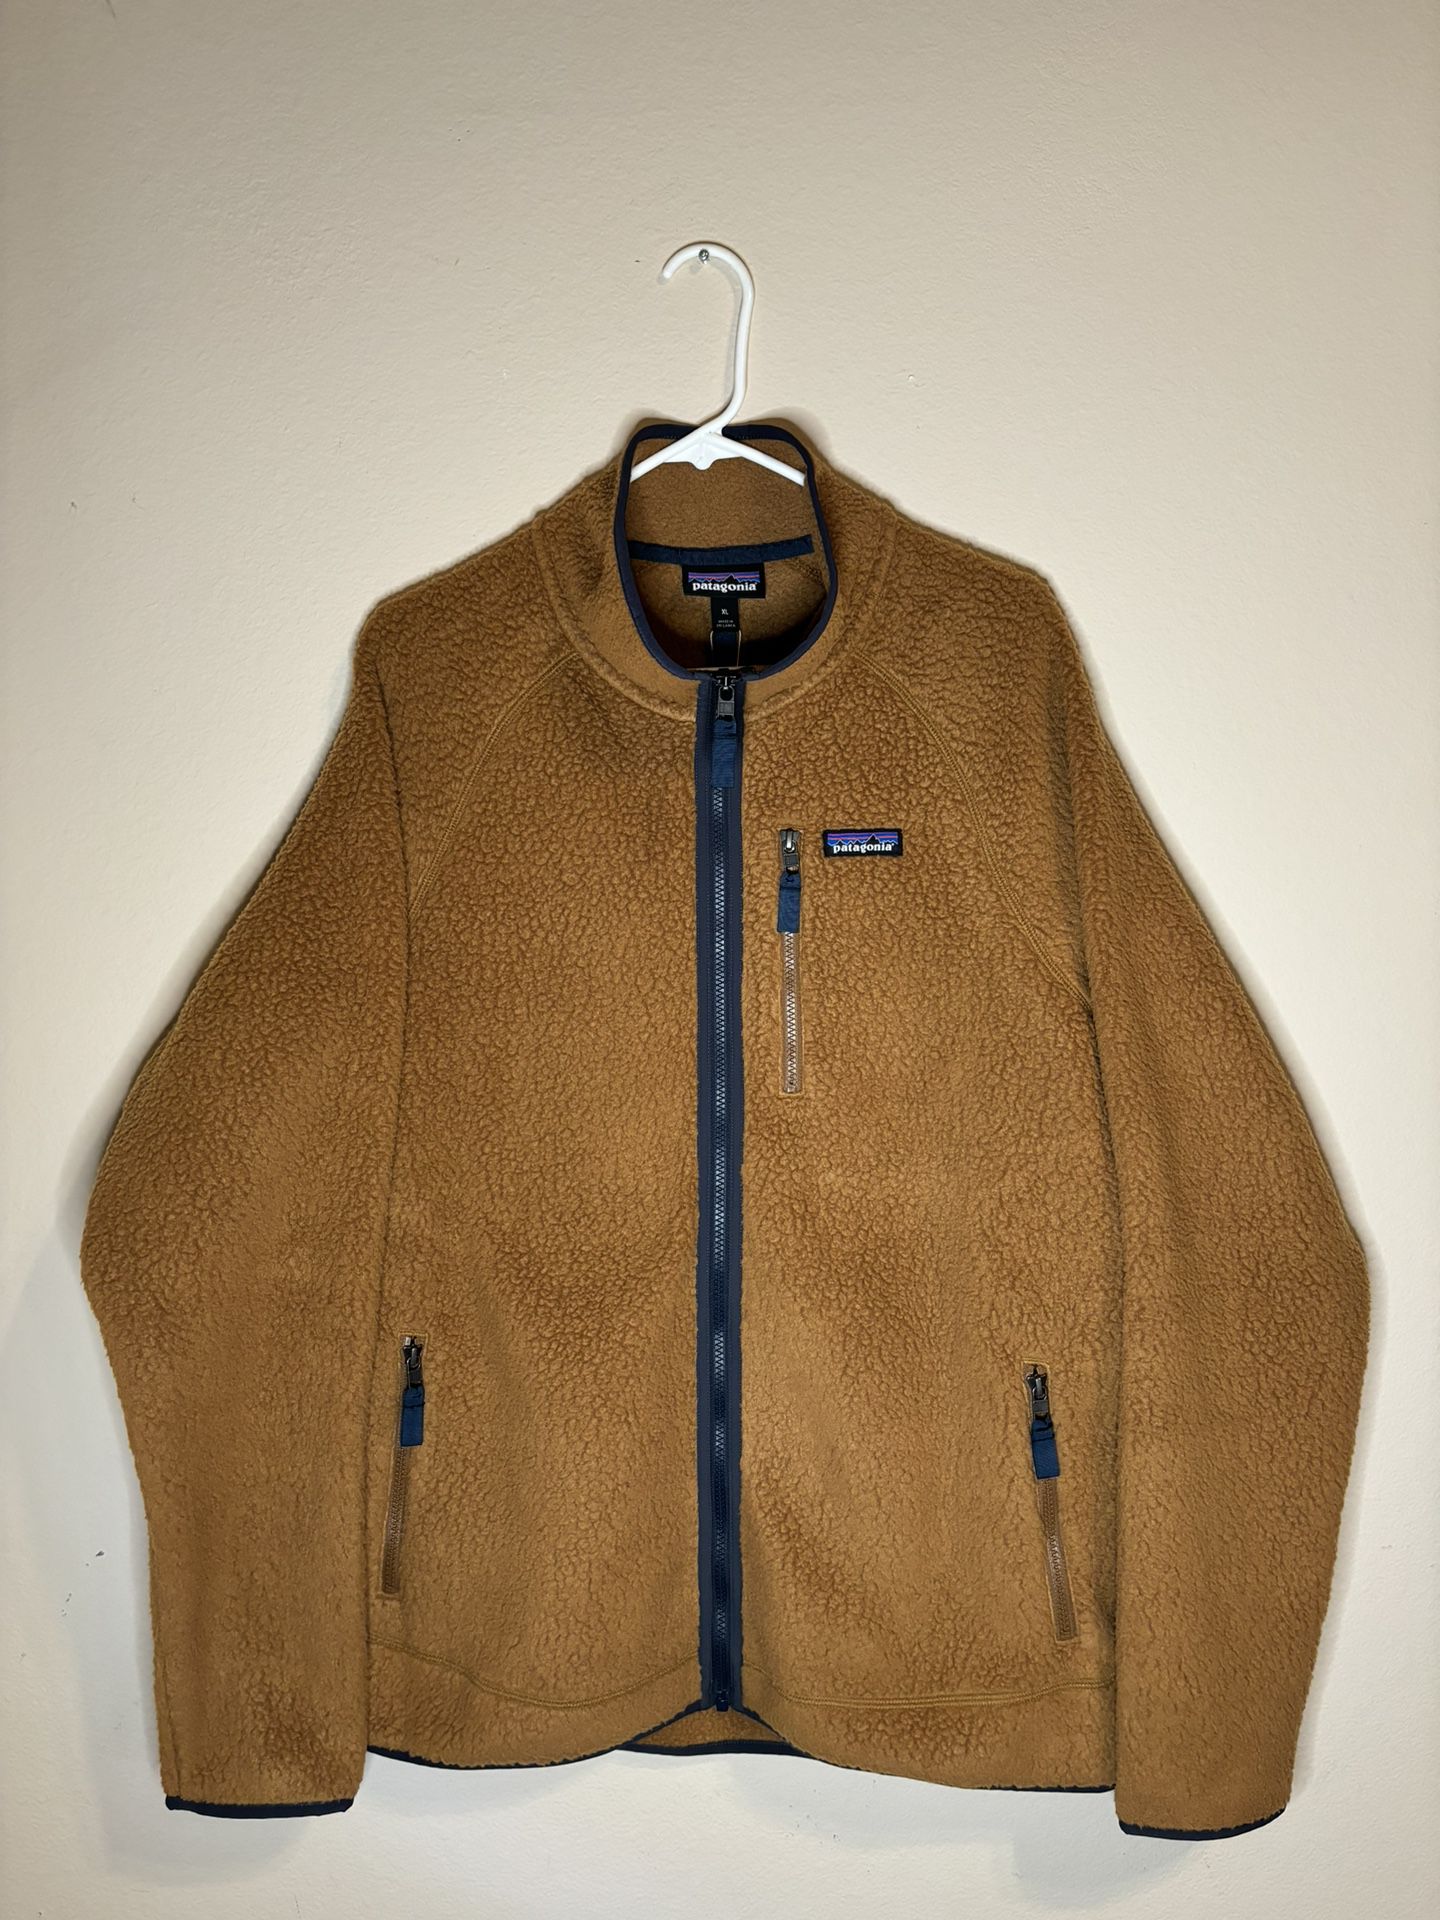 Patagonia Fleece Jacket (XL)